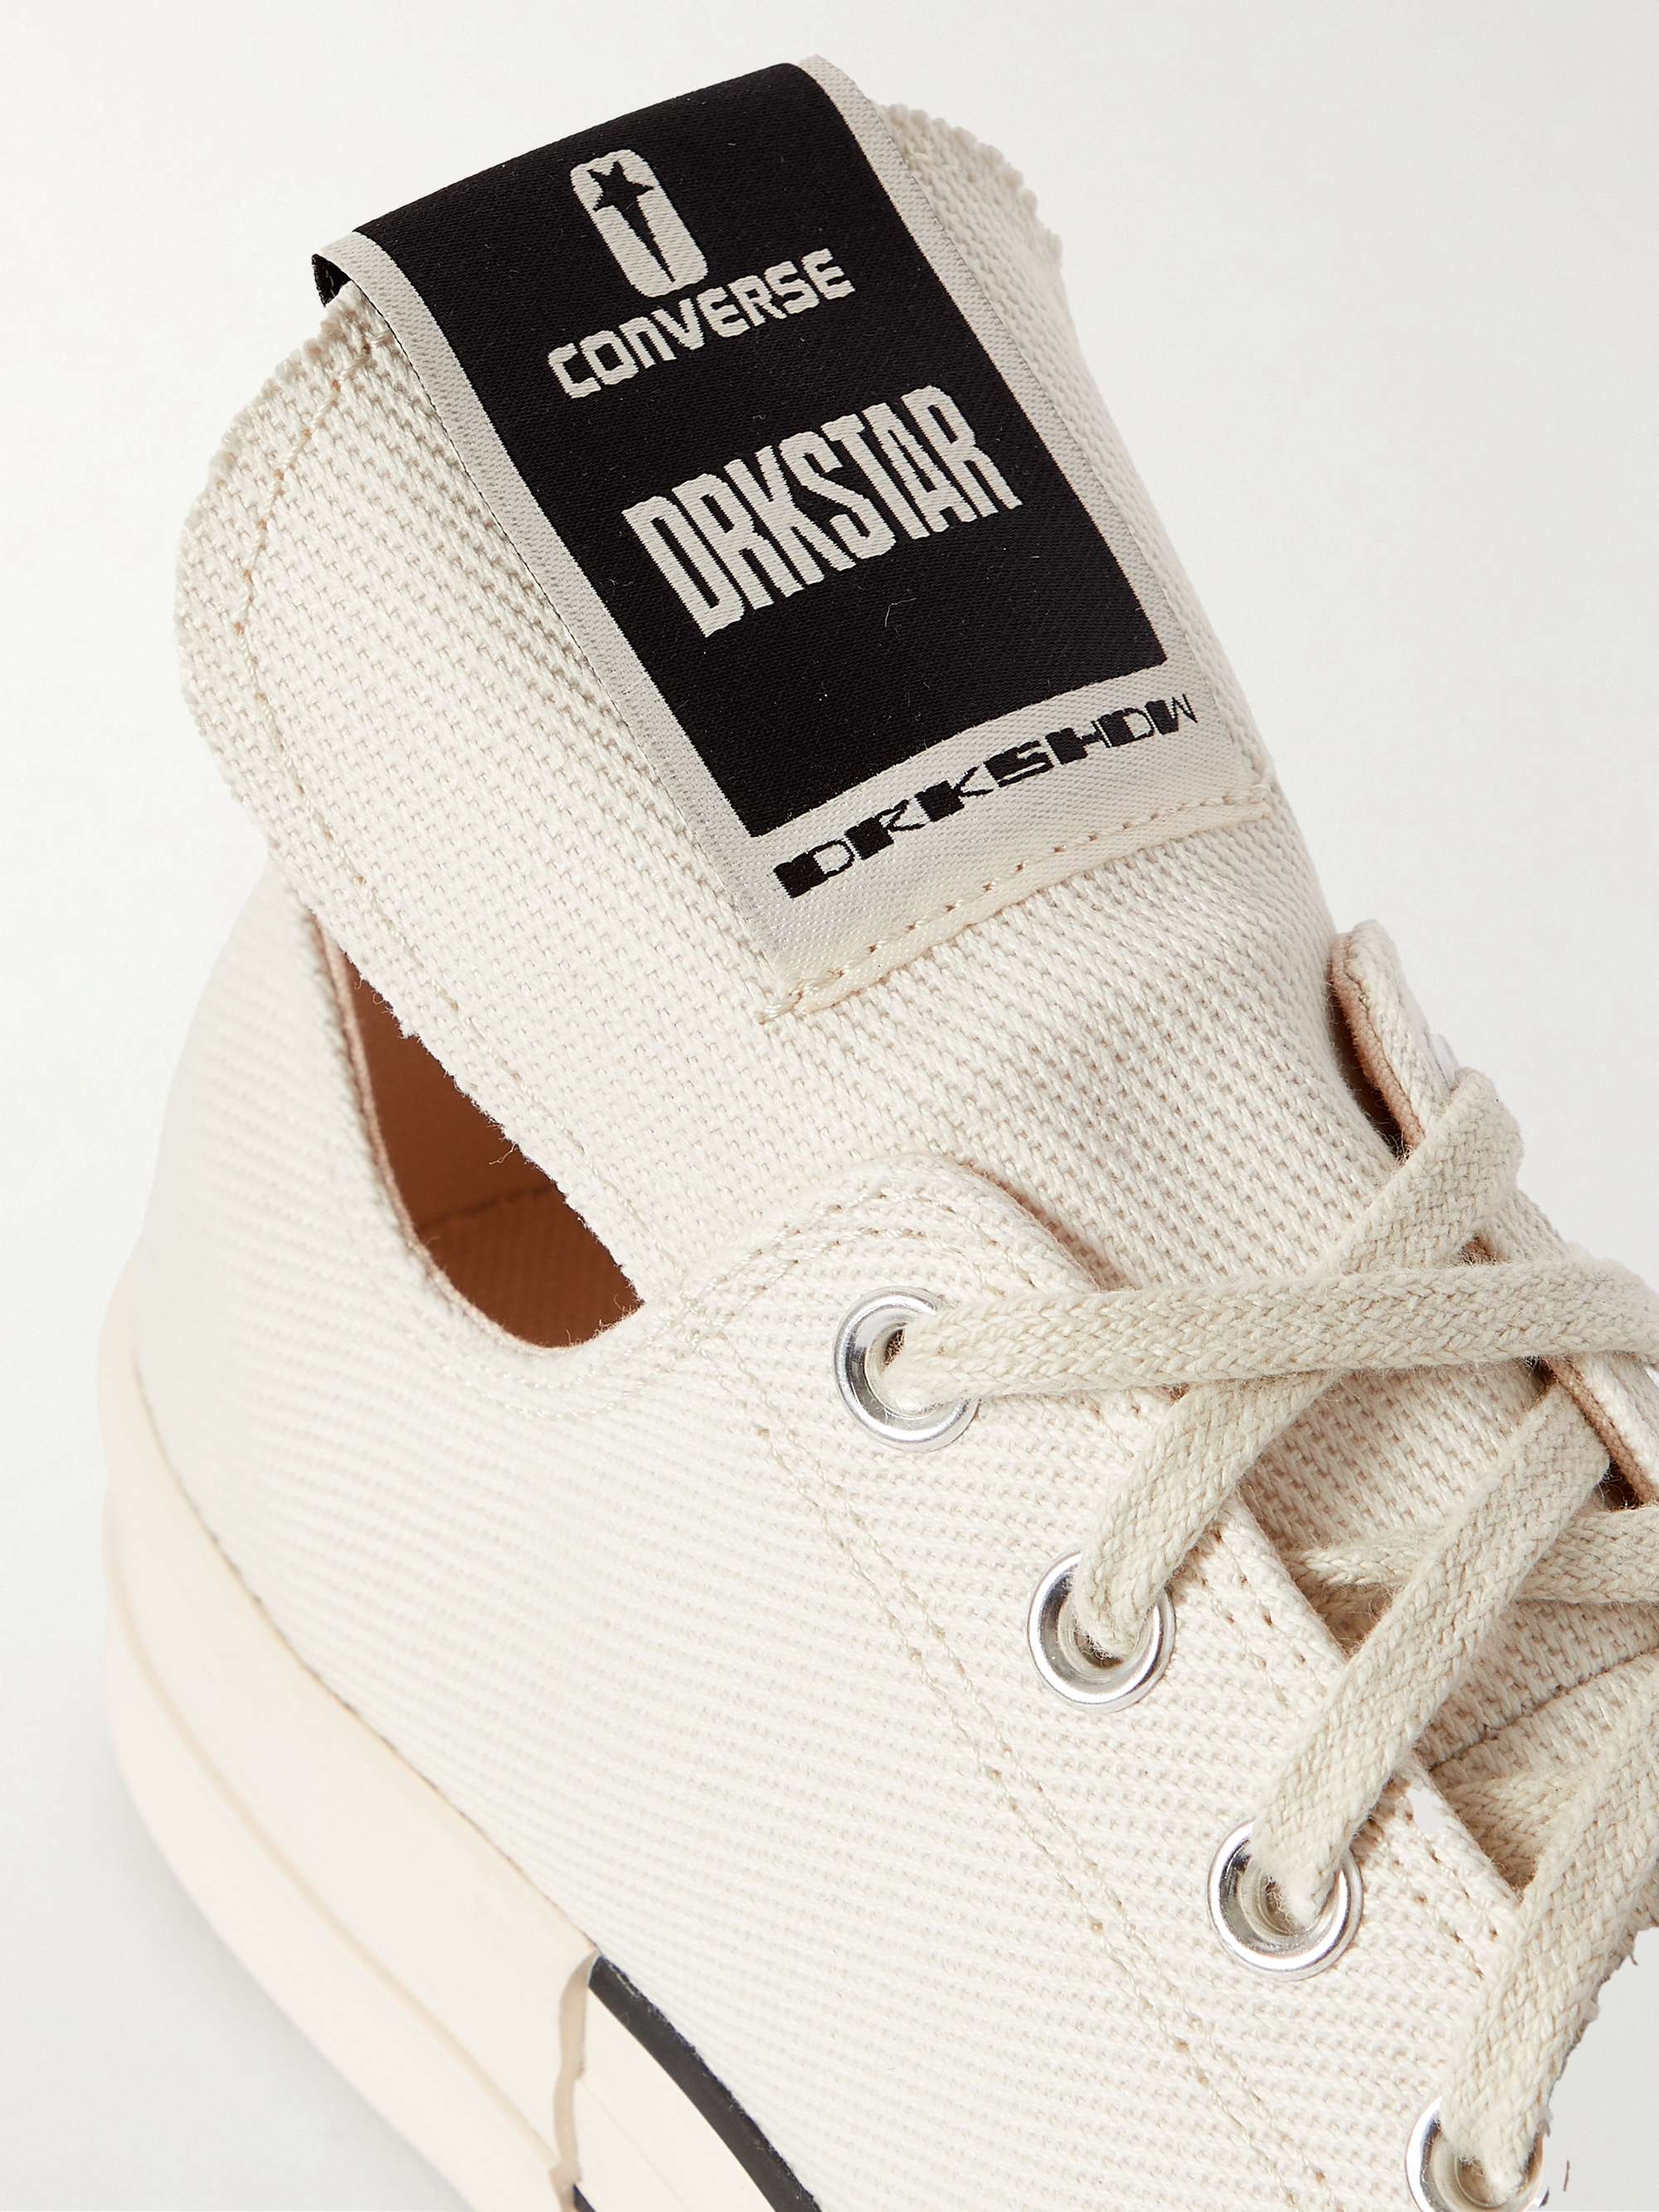 RICK OWENS + Converse DRKSTAR OX Canvas Sneakers